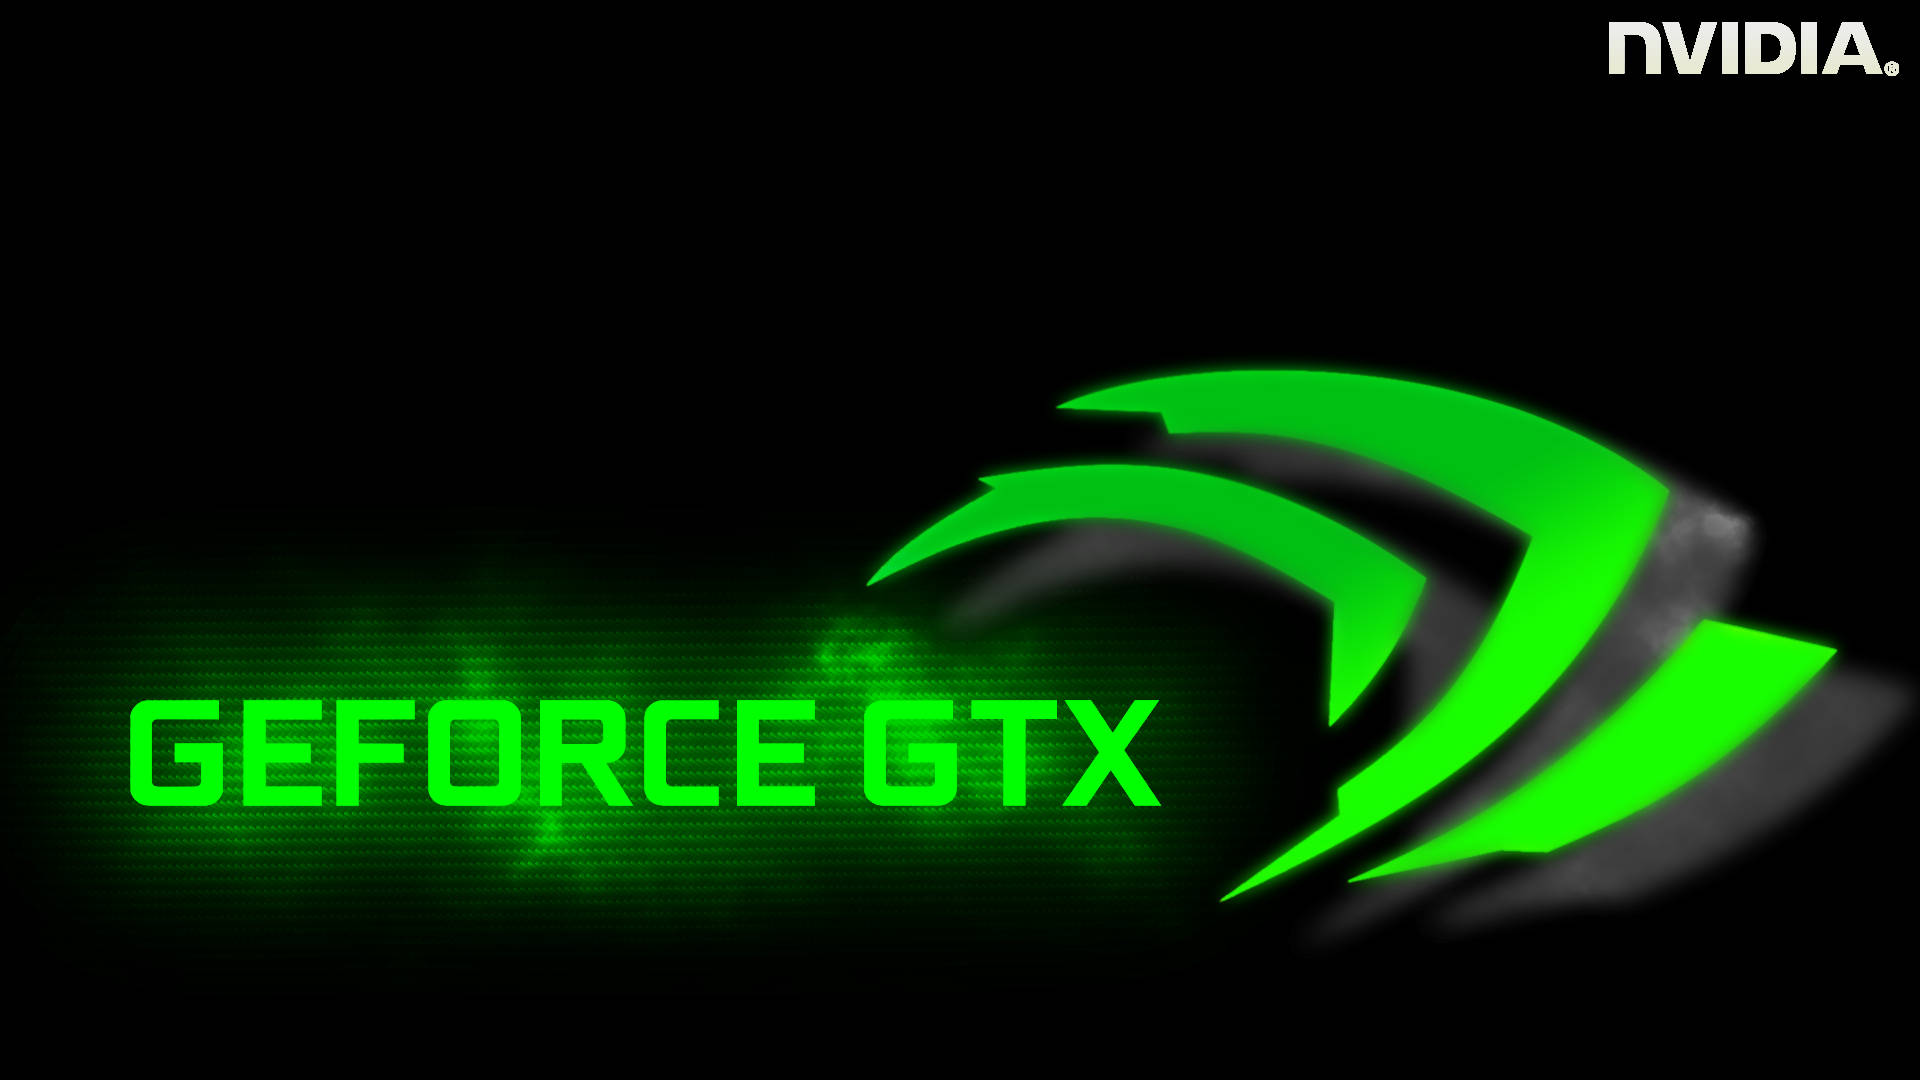 Nvidia Gtx Neon Green Background